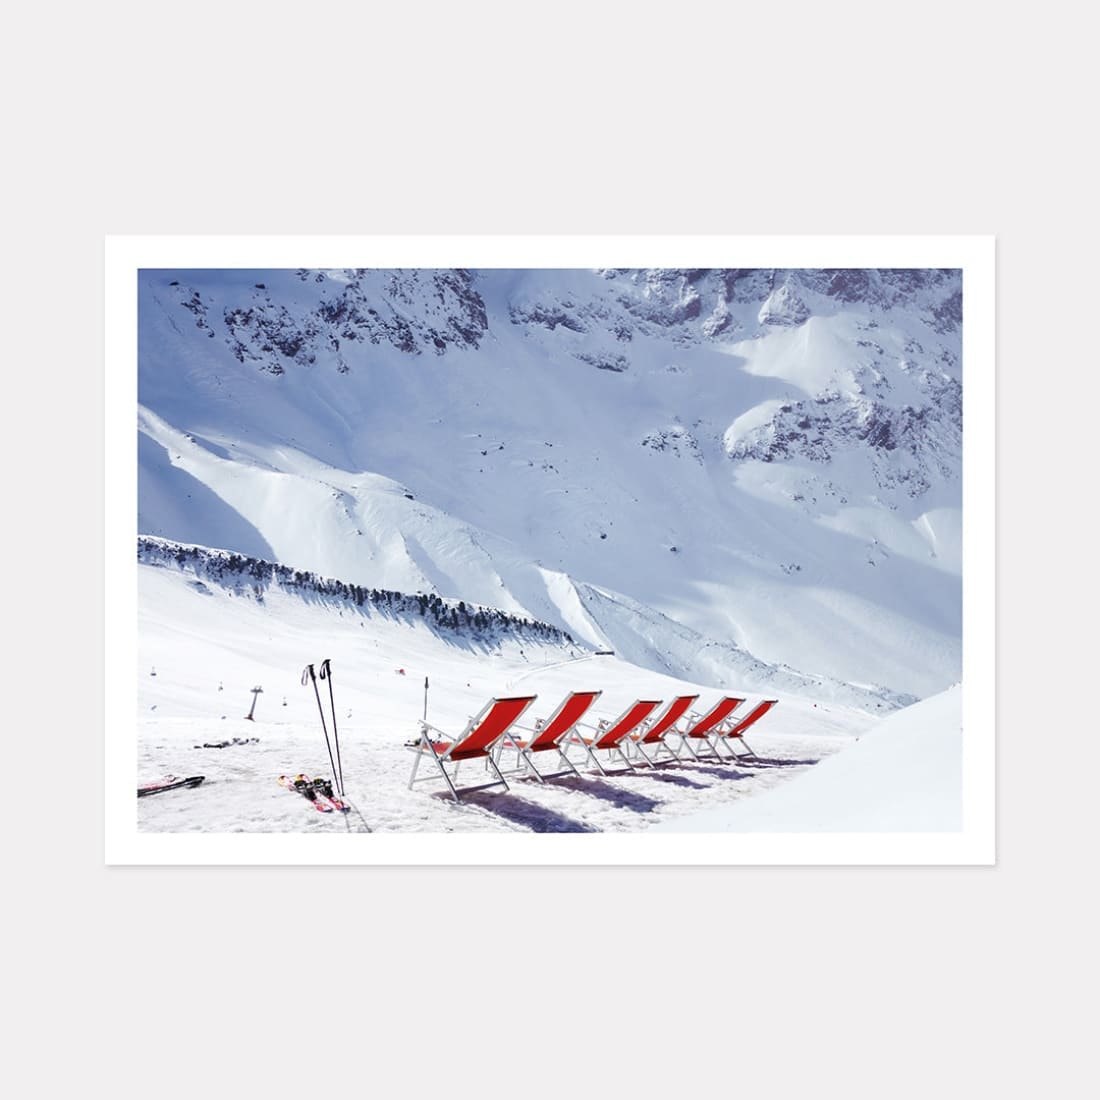 Red Deck Chairs Mountain Art Print, A2 (59.4cm x 42cm) unframed print – Powderhound